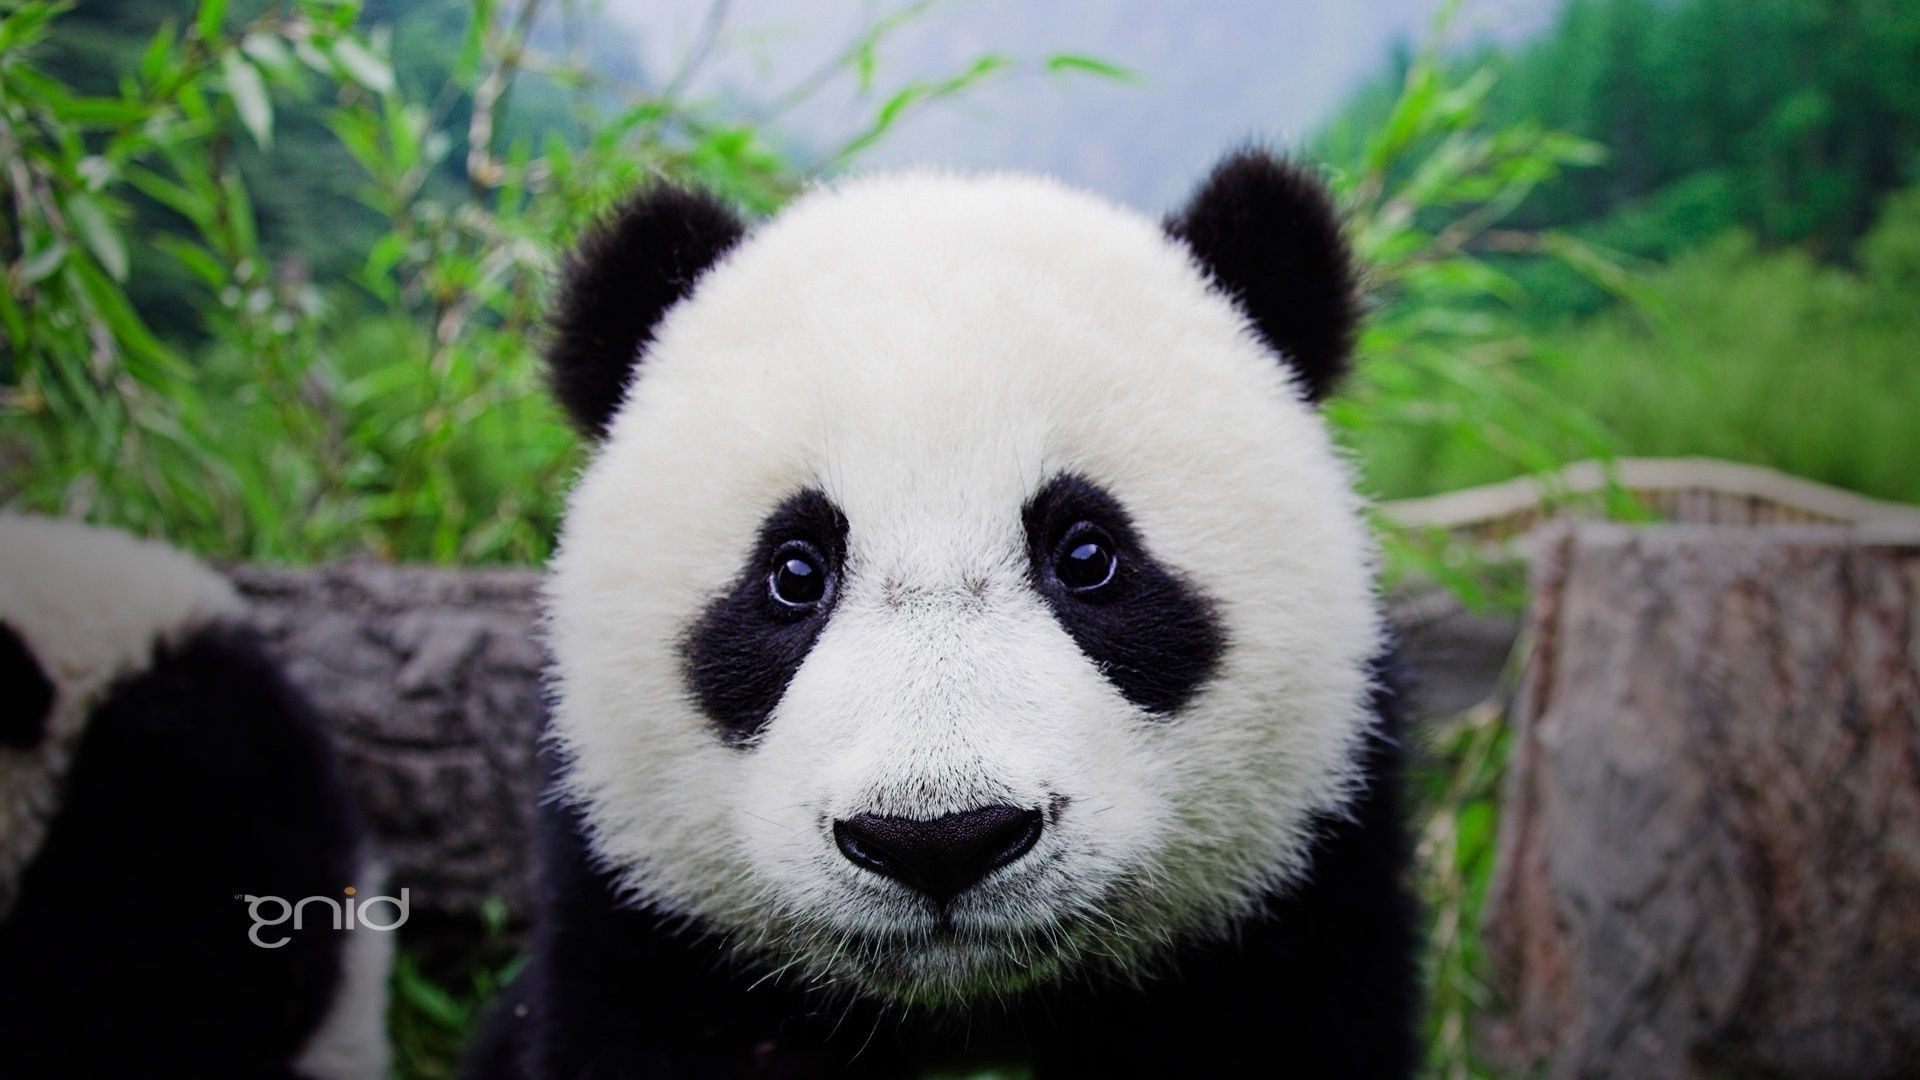 herbivores nature wildlife cute animal mammal grass wild panda zoo outdoors fur